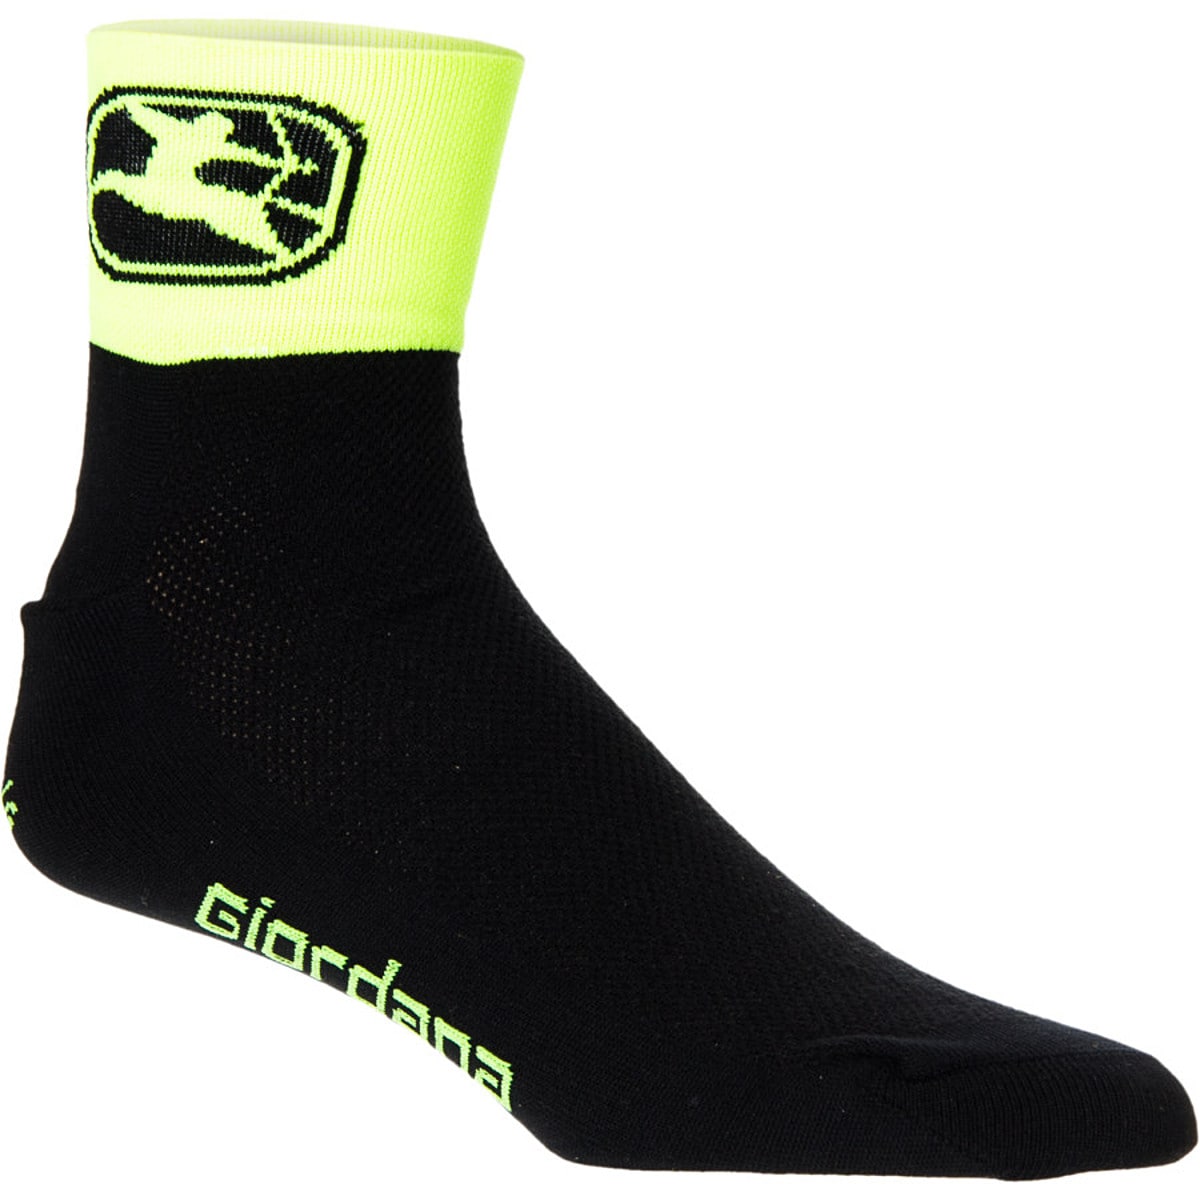 Giordana Classic Trade Mid Cuff Socks Men's